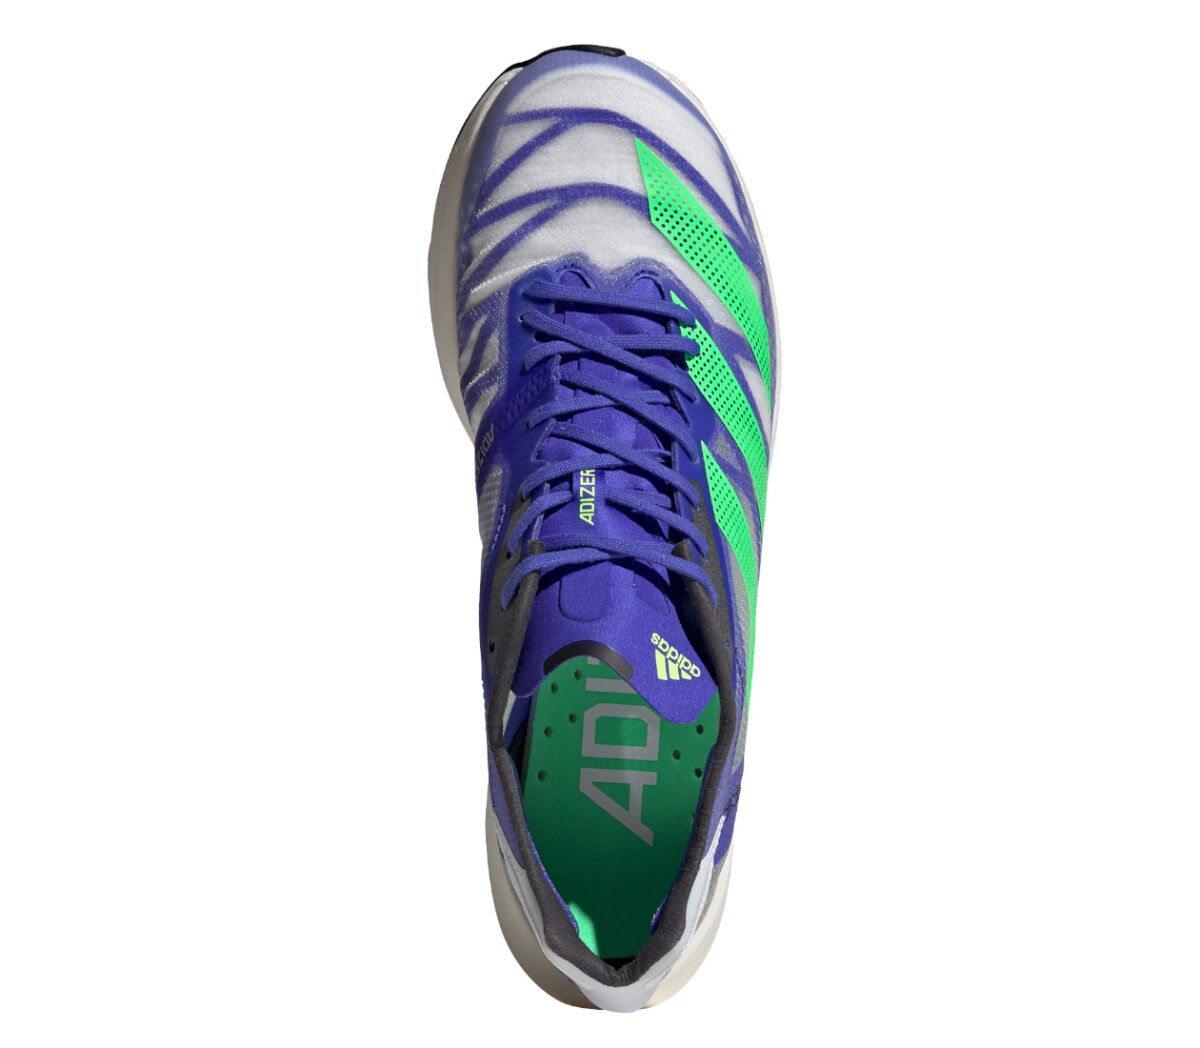 tomaia scarpa da running unisex reattiva adidas adios pro 2 blu e verde